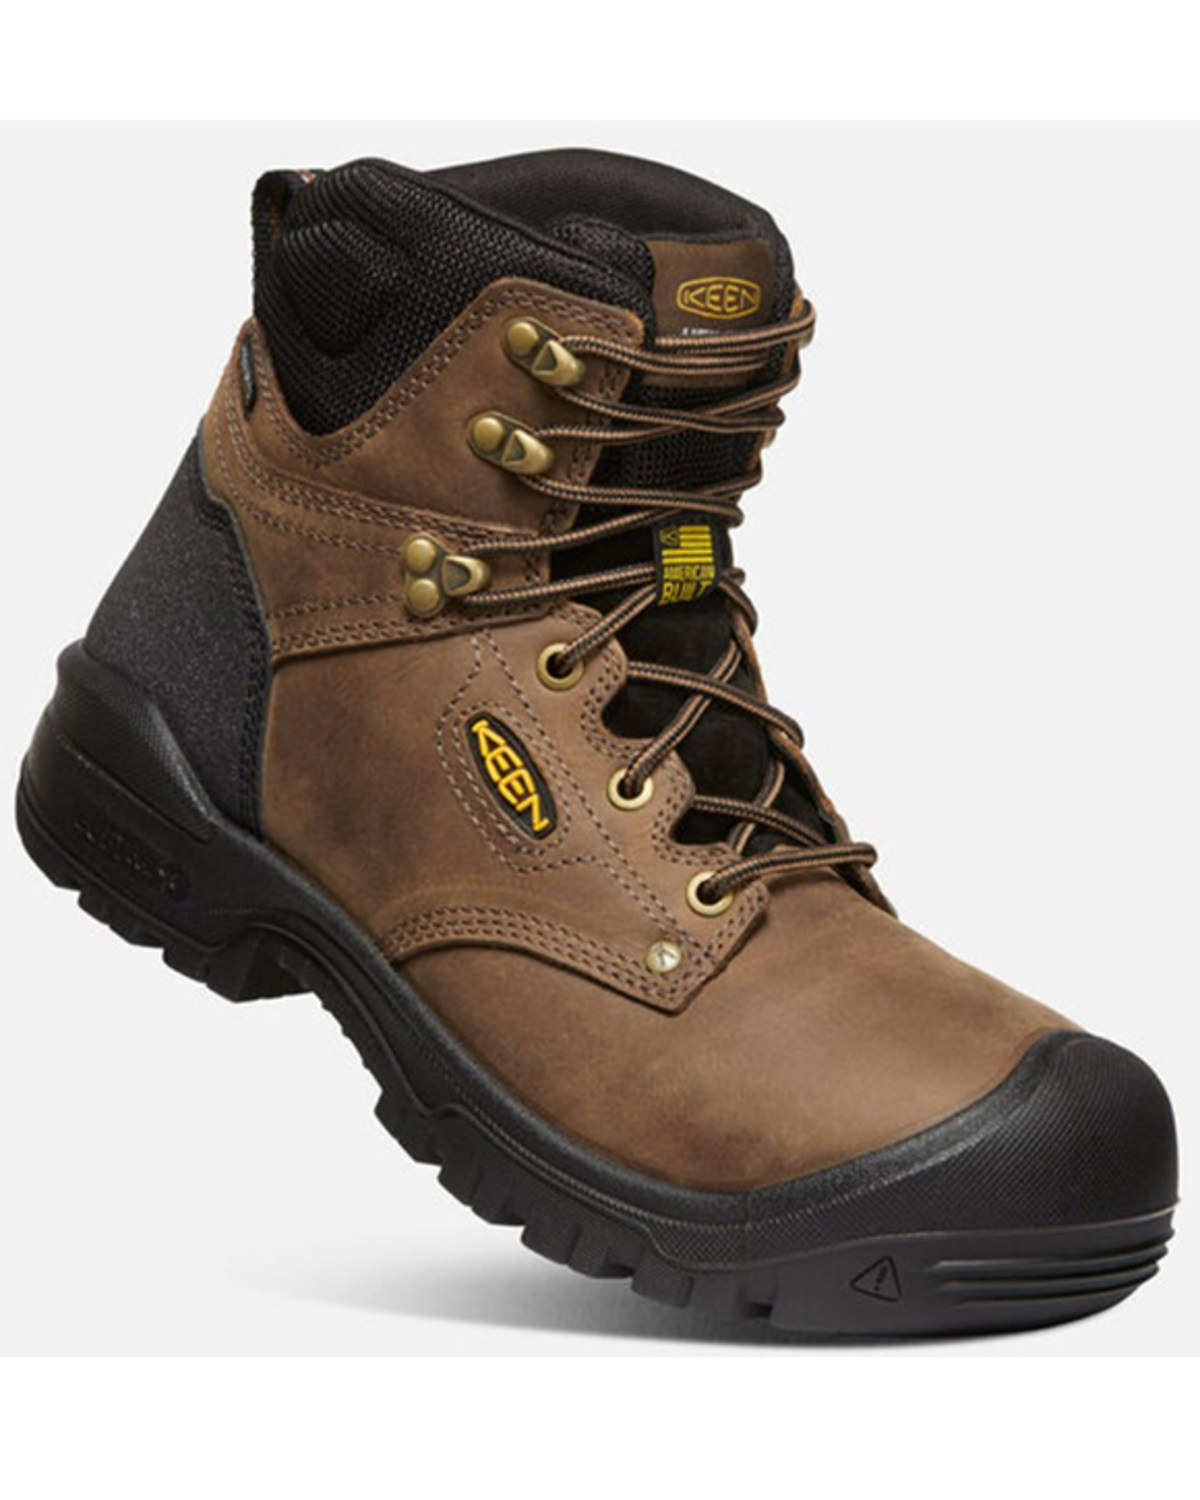 Keen Men's Independence 6" Waterproof Work Boots - Soft Toe